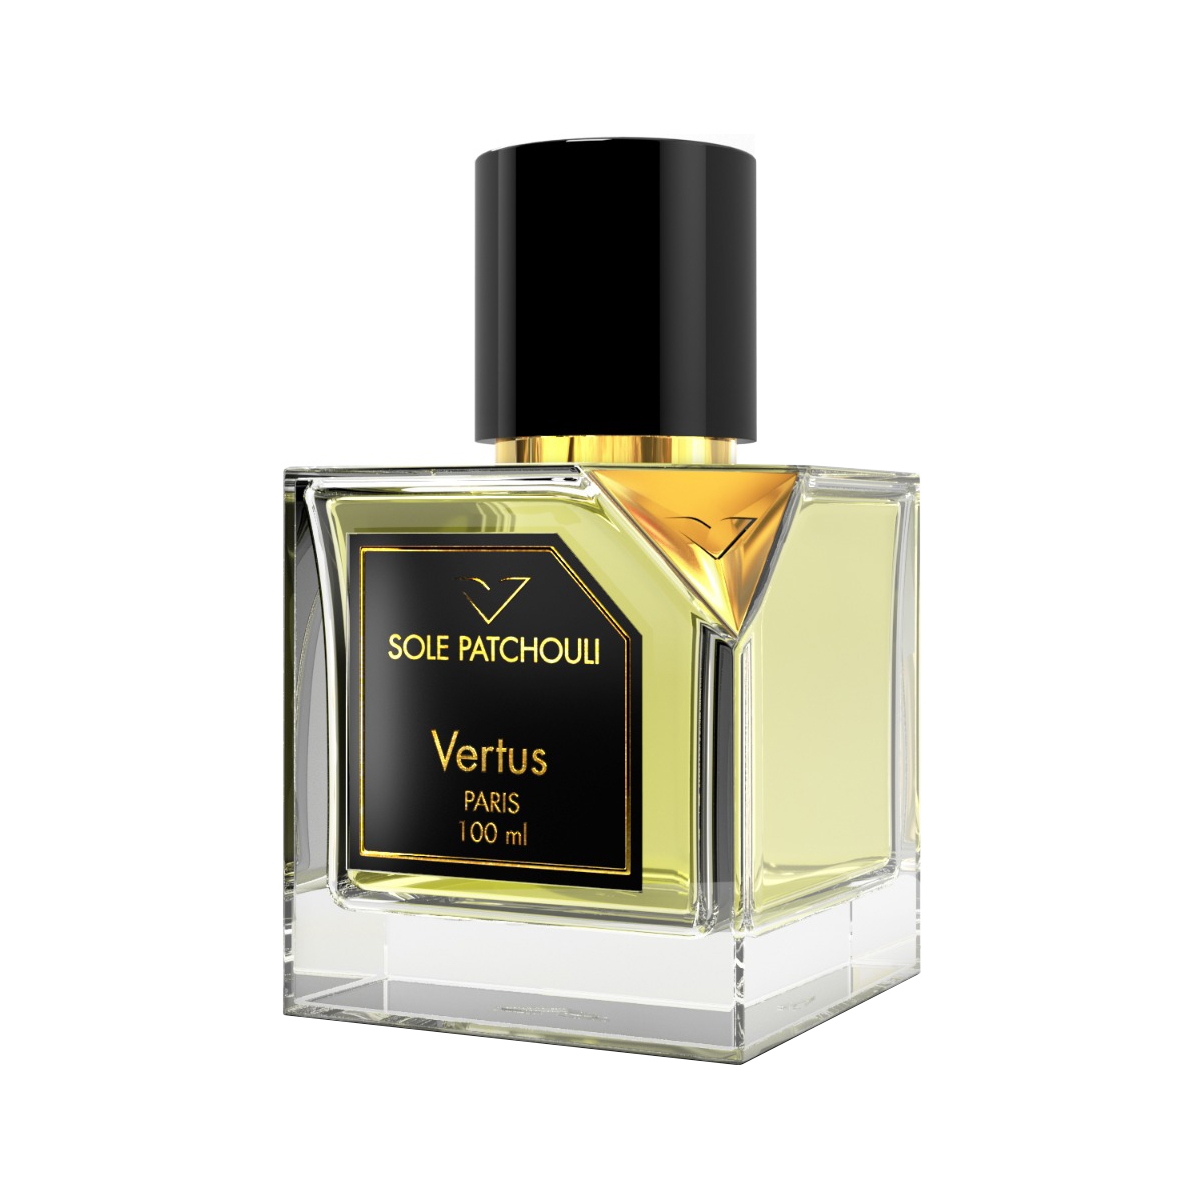 Sole Patchouli Vertus Perfumes, Unisex Perfumes, Arada Perfumes